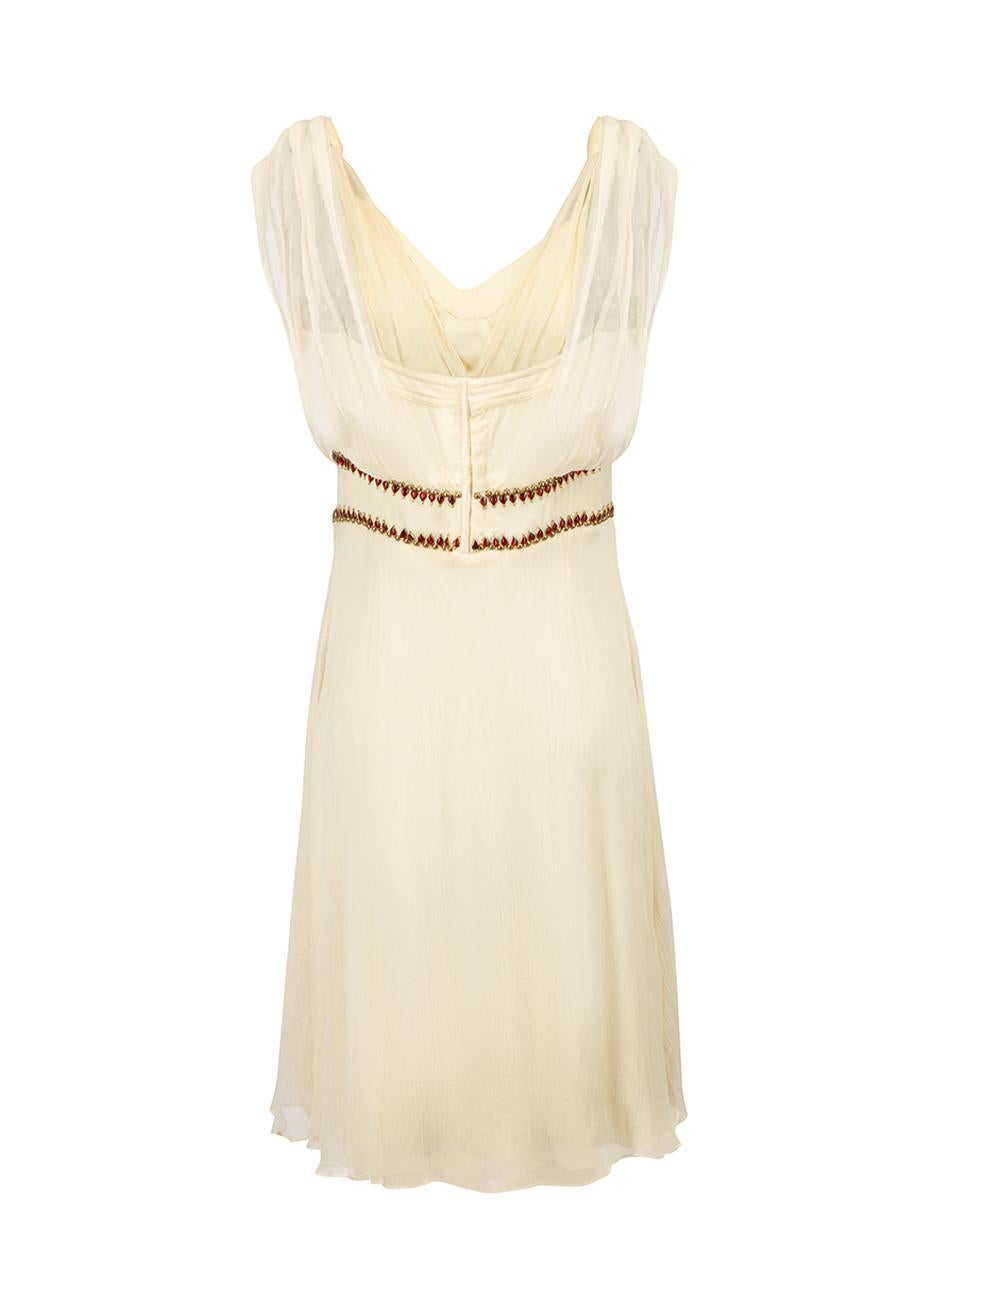 cream embellished dress